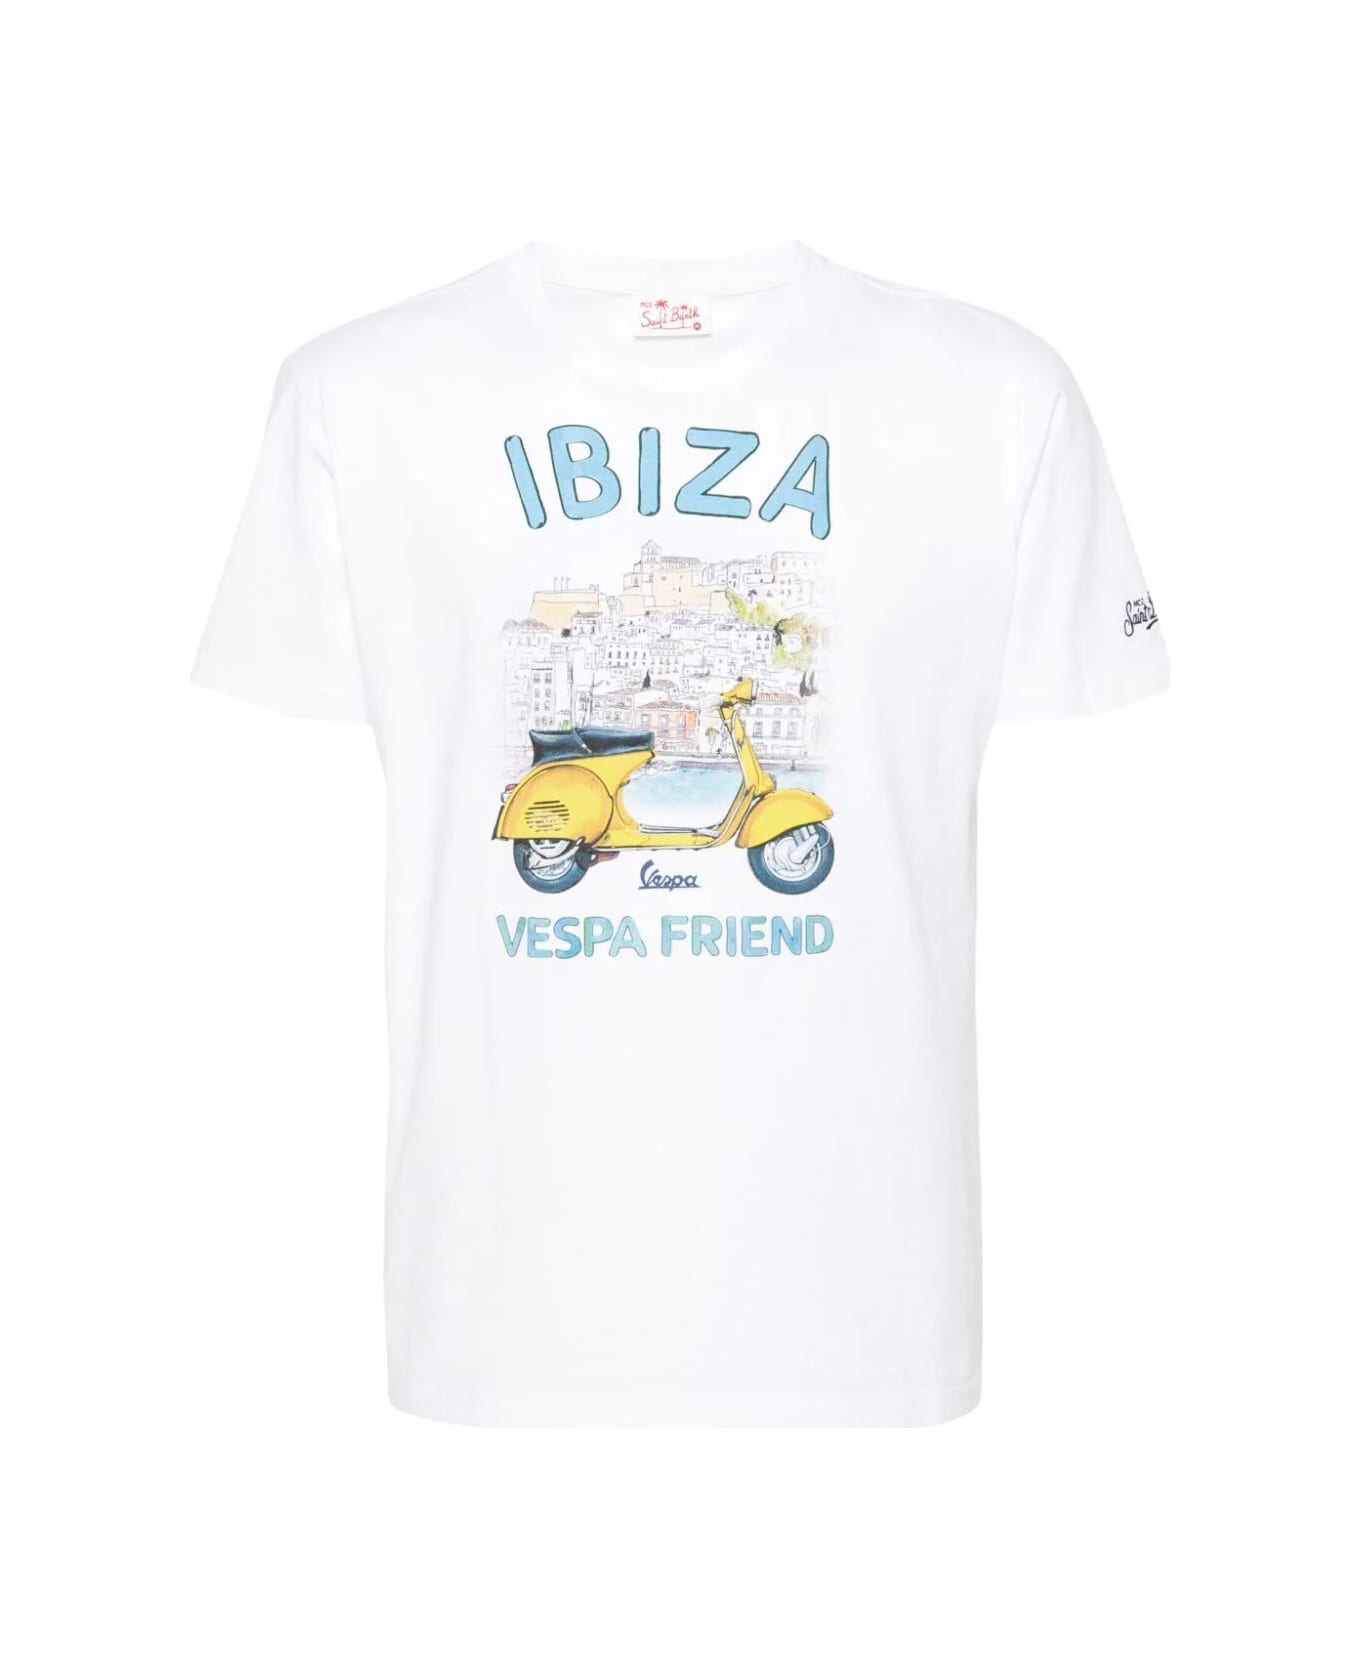 MC2 Saint Barth Cotton Classic T-shirt - N Ibiza Vespa